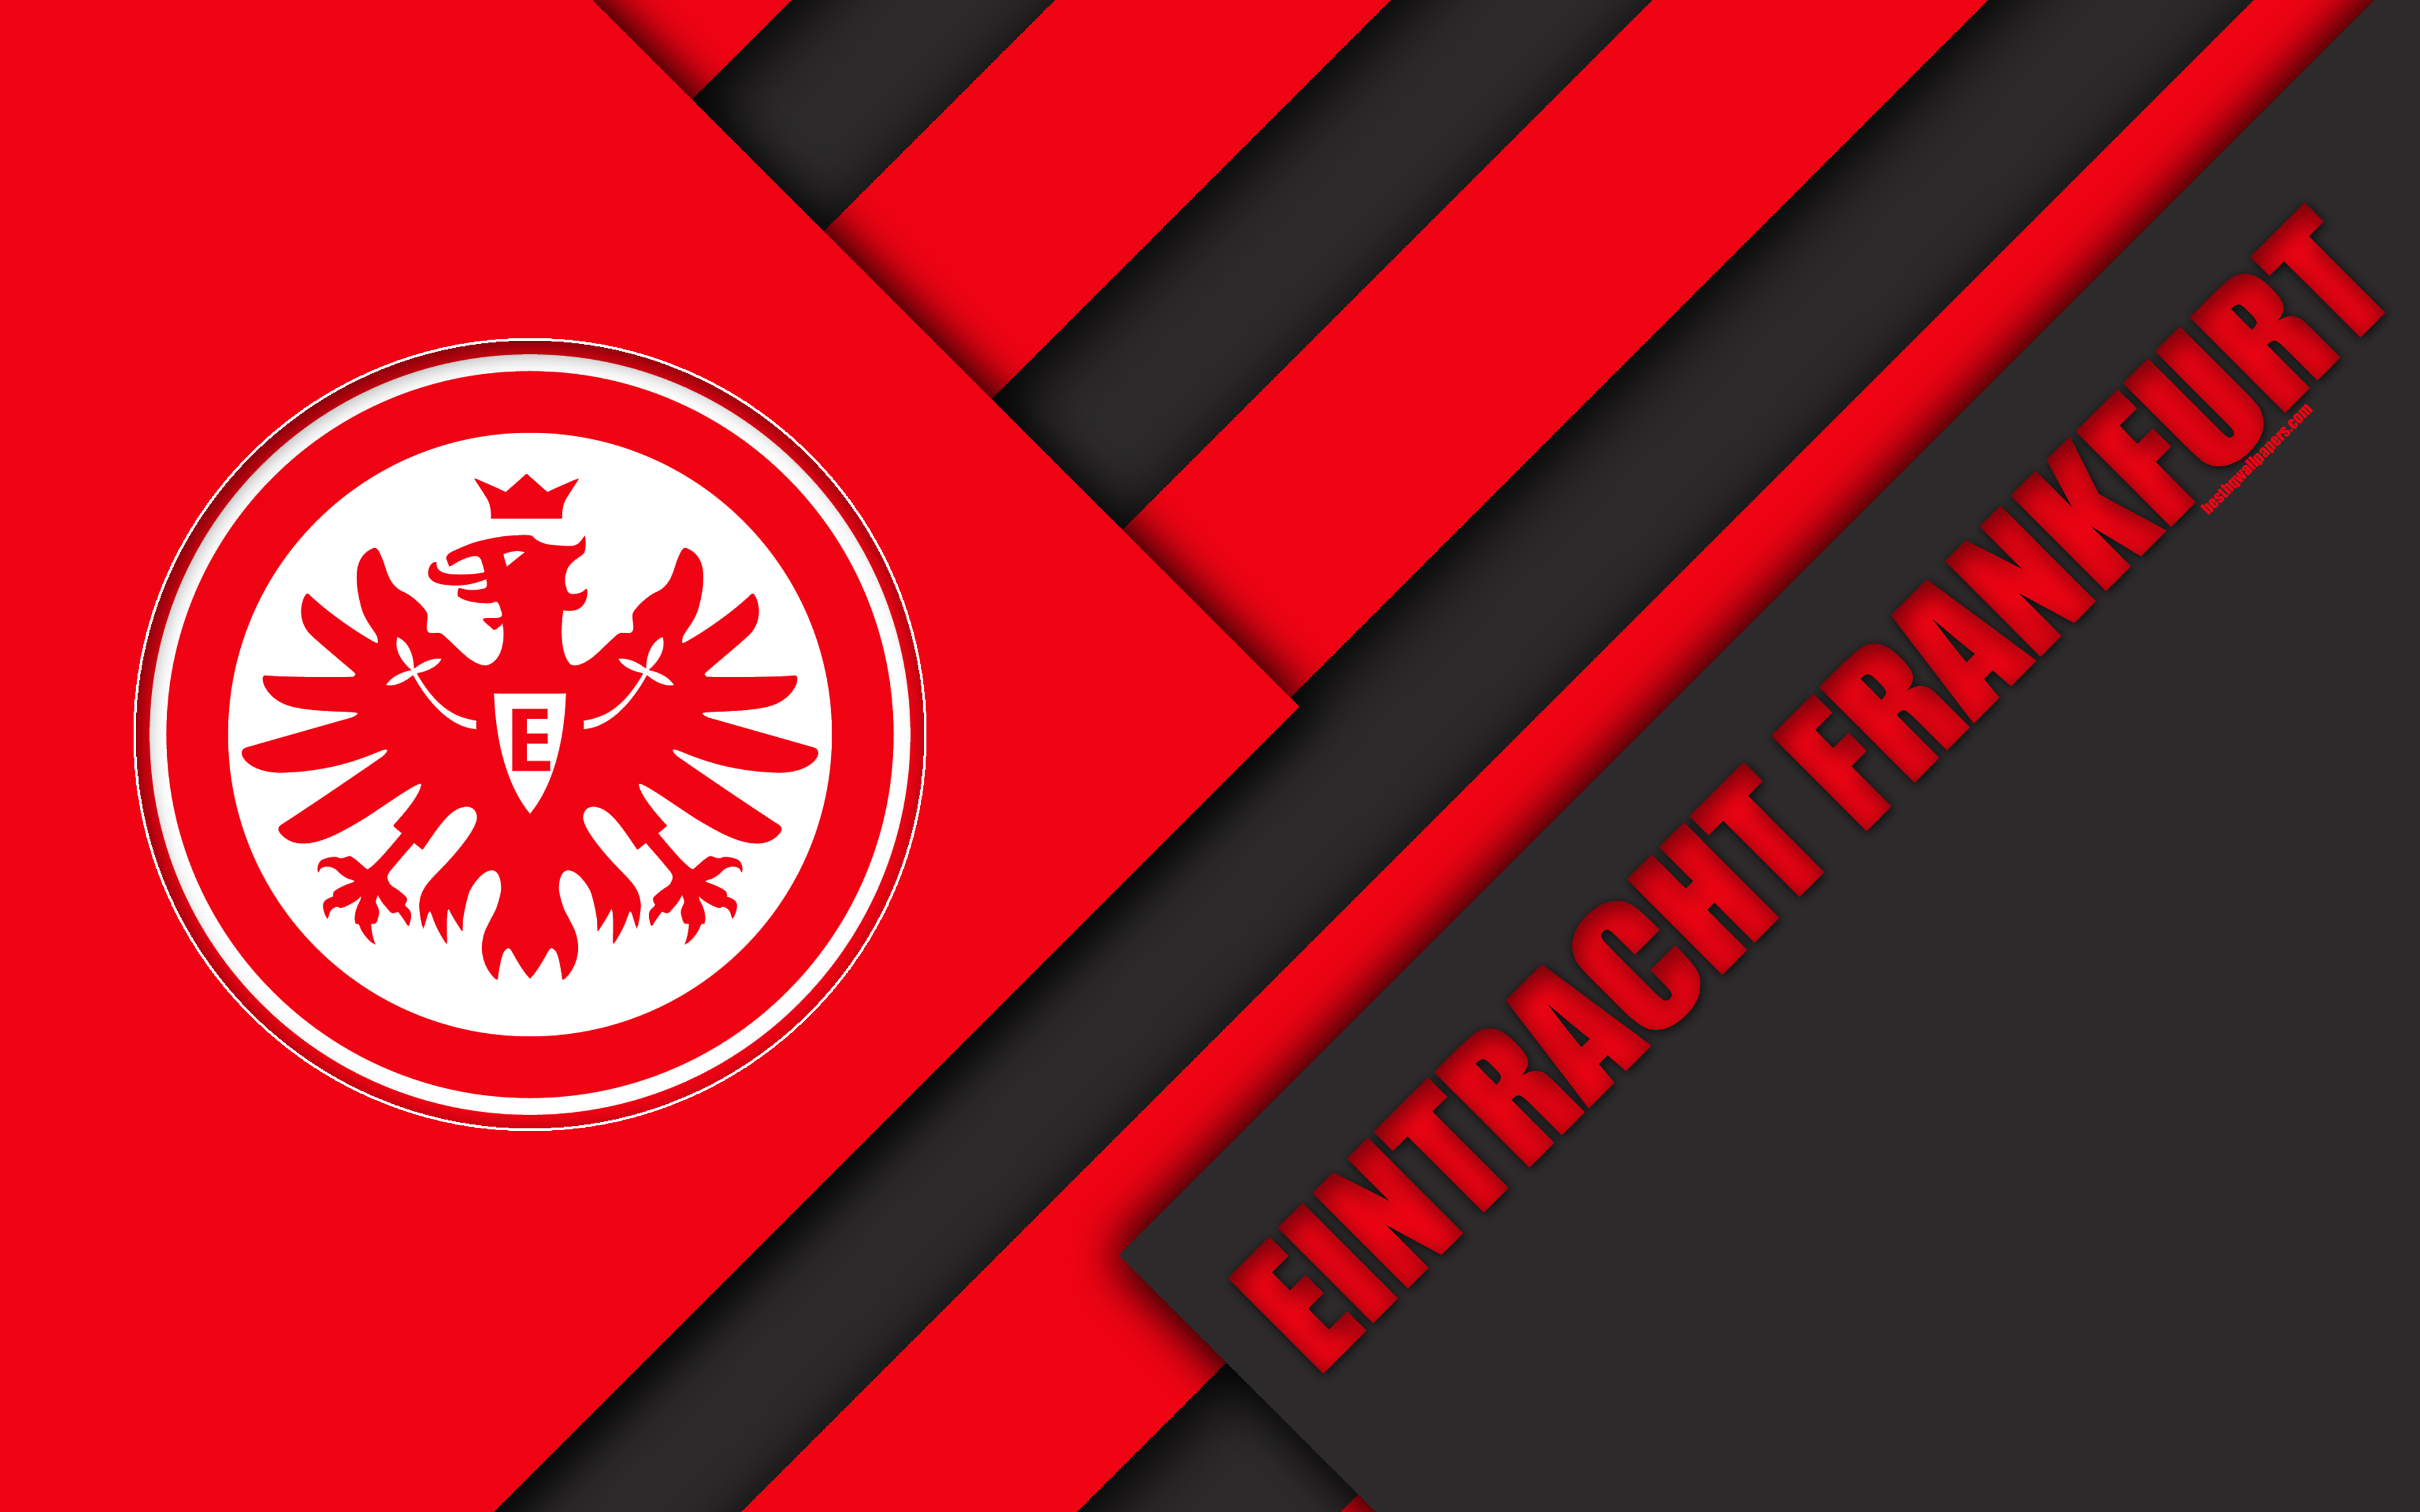 Download wallpaper Eintracht Frankfurt FC, 4k, material design